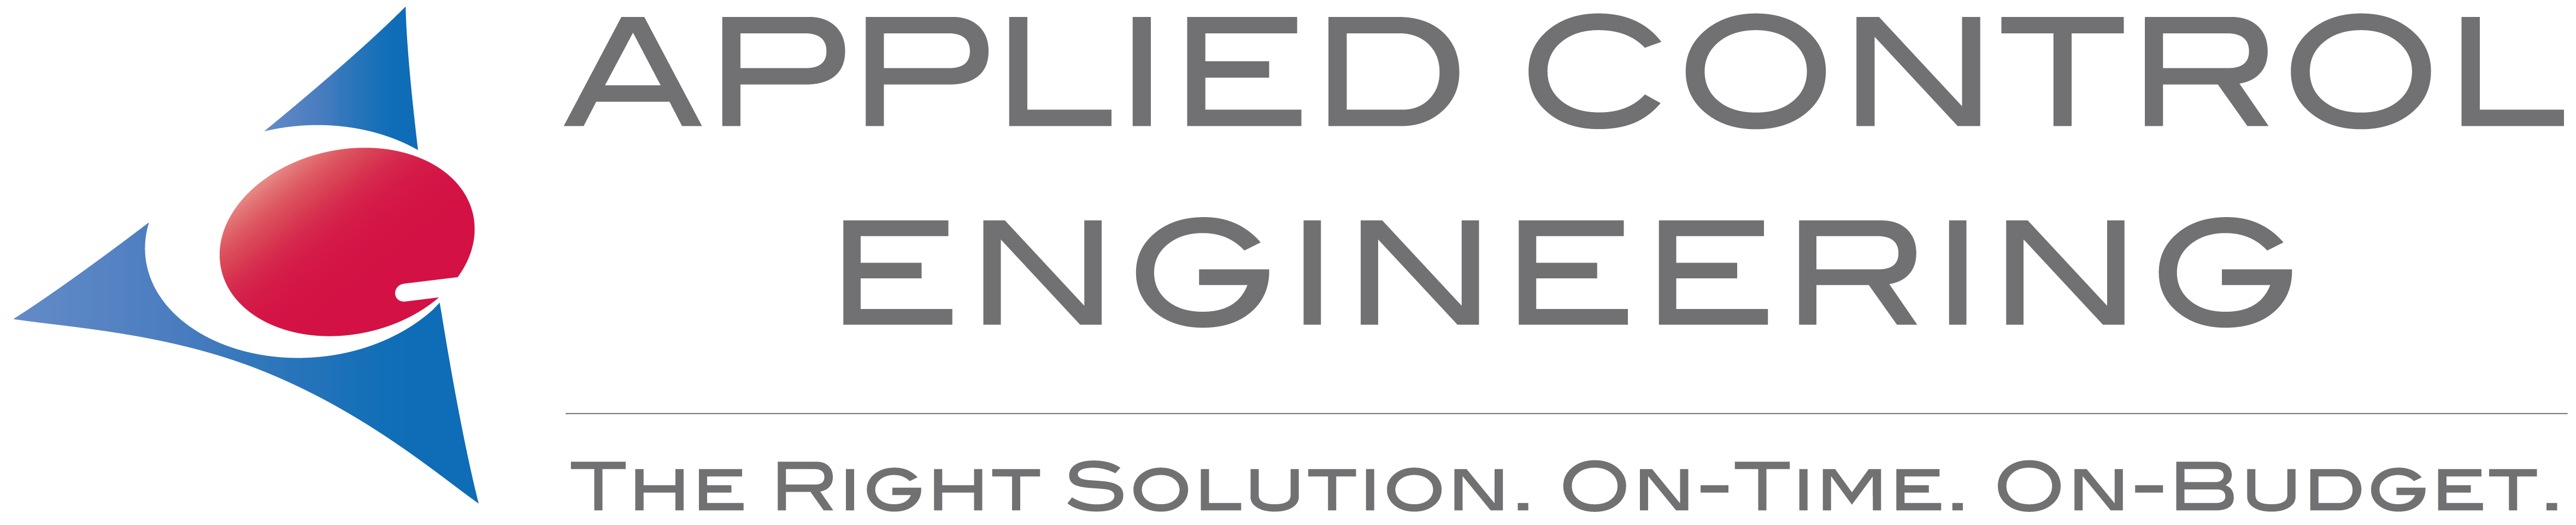 Applied Control Engineering logo